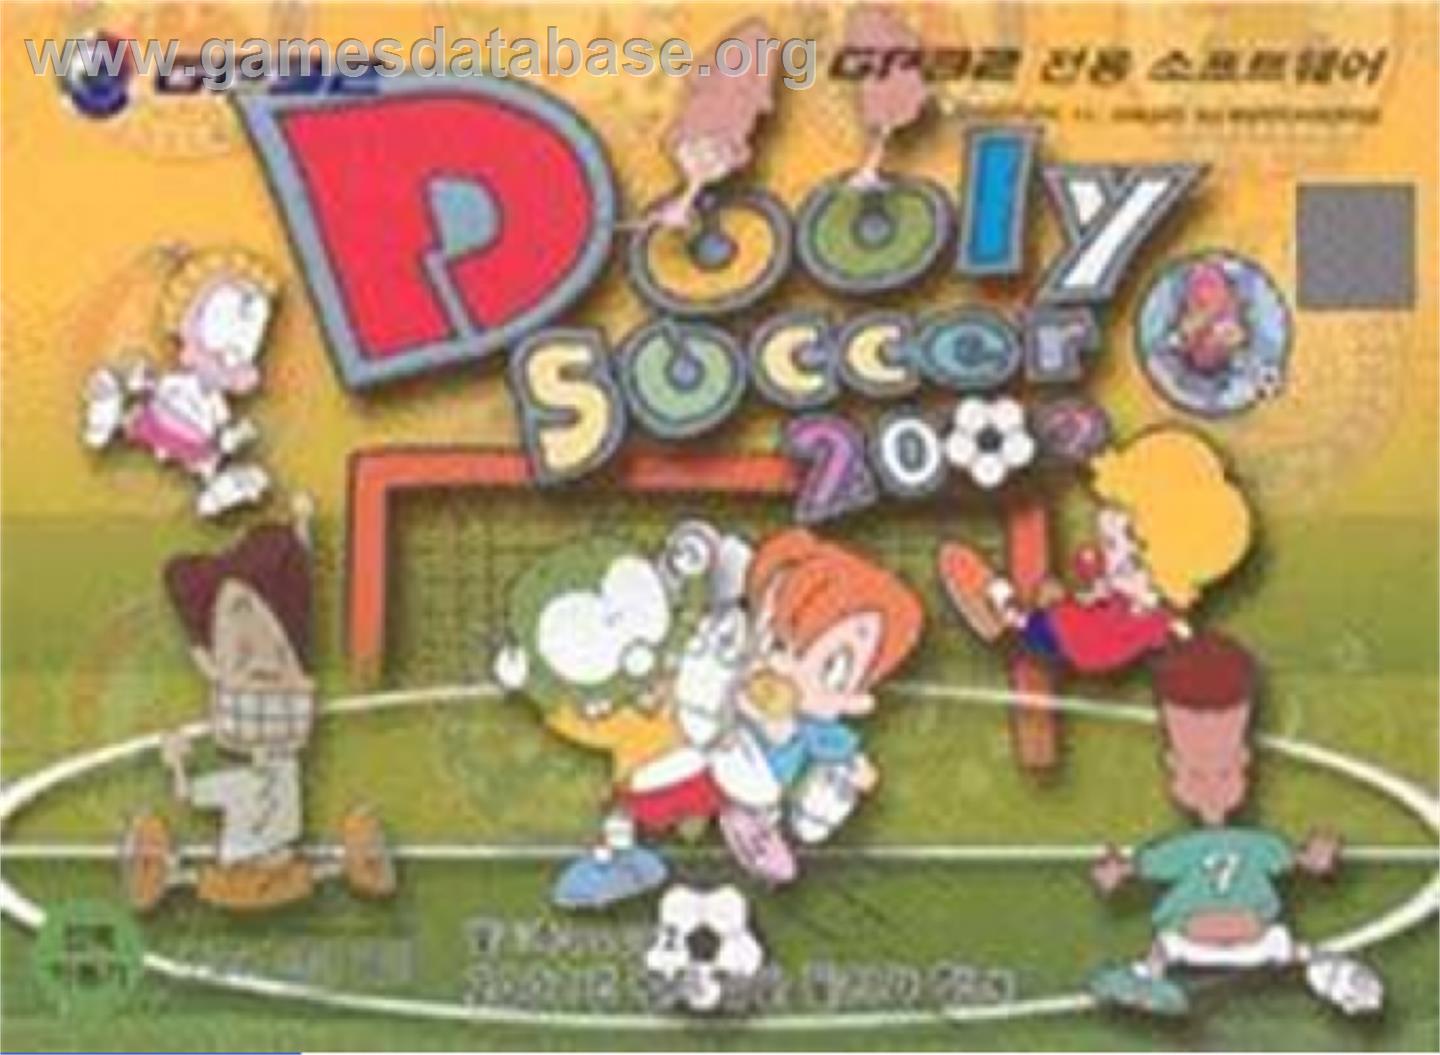 Dooly Soccer 2002 - Gamepark GP32 - Artwork - Box